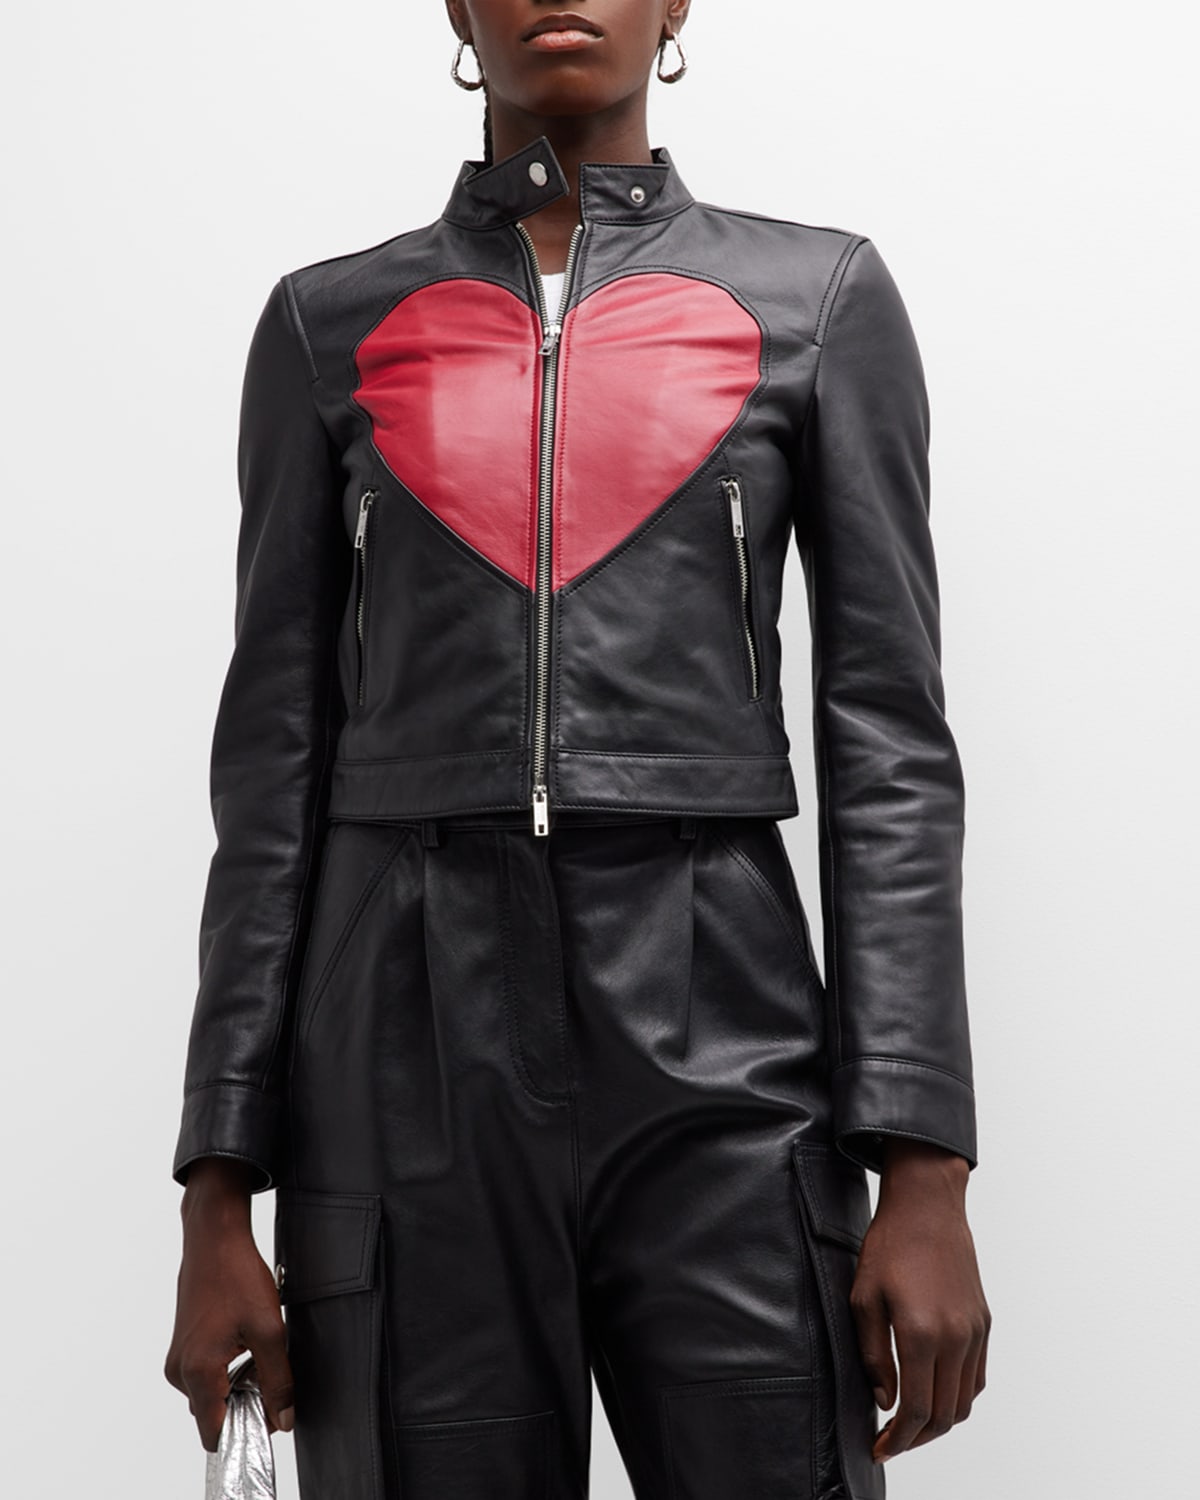 Heart Leather Jacket